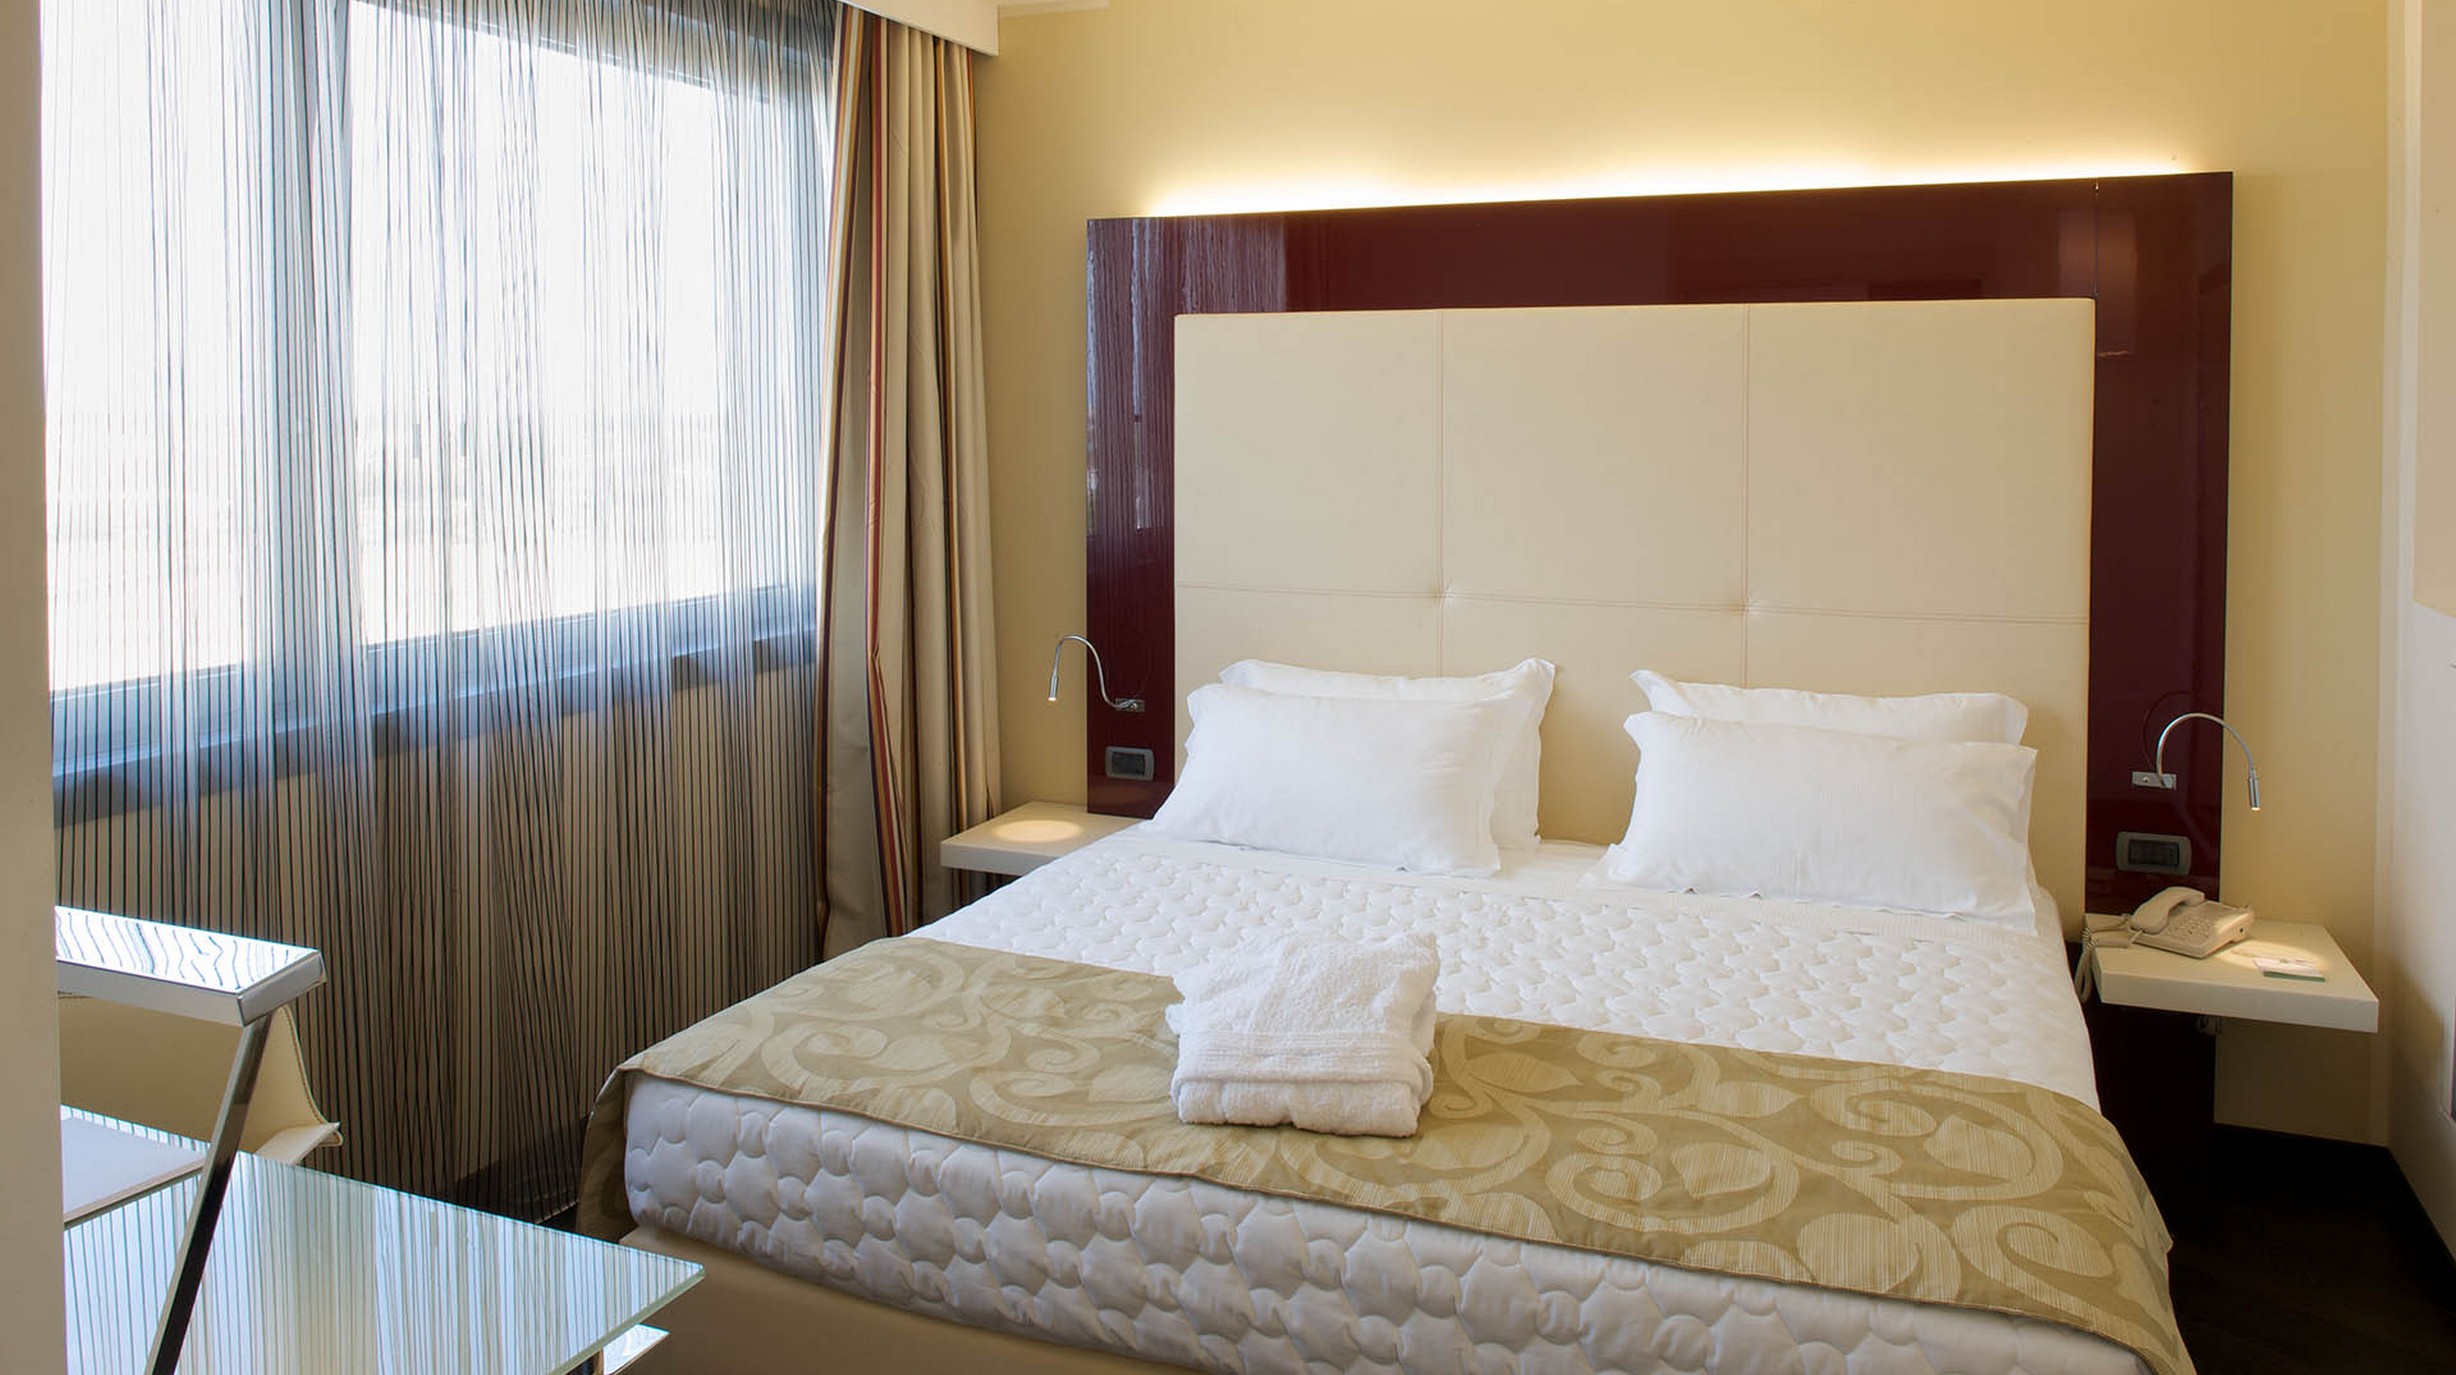 Grand-hotel-mattei-4-star-hotel-ravenna-executive-room